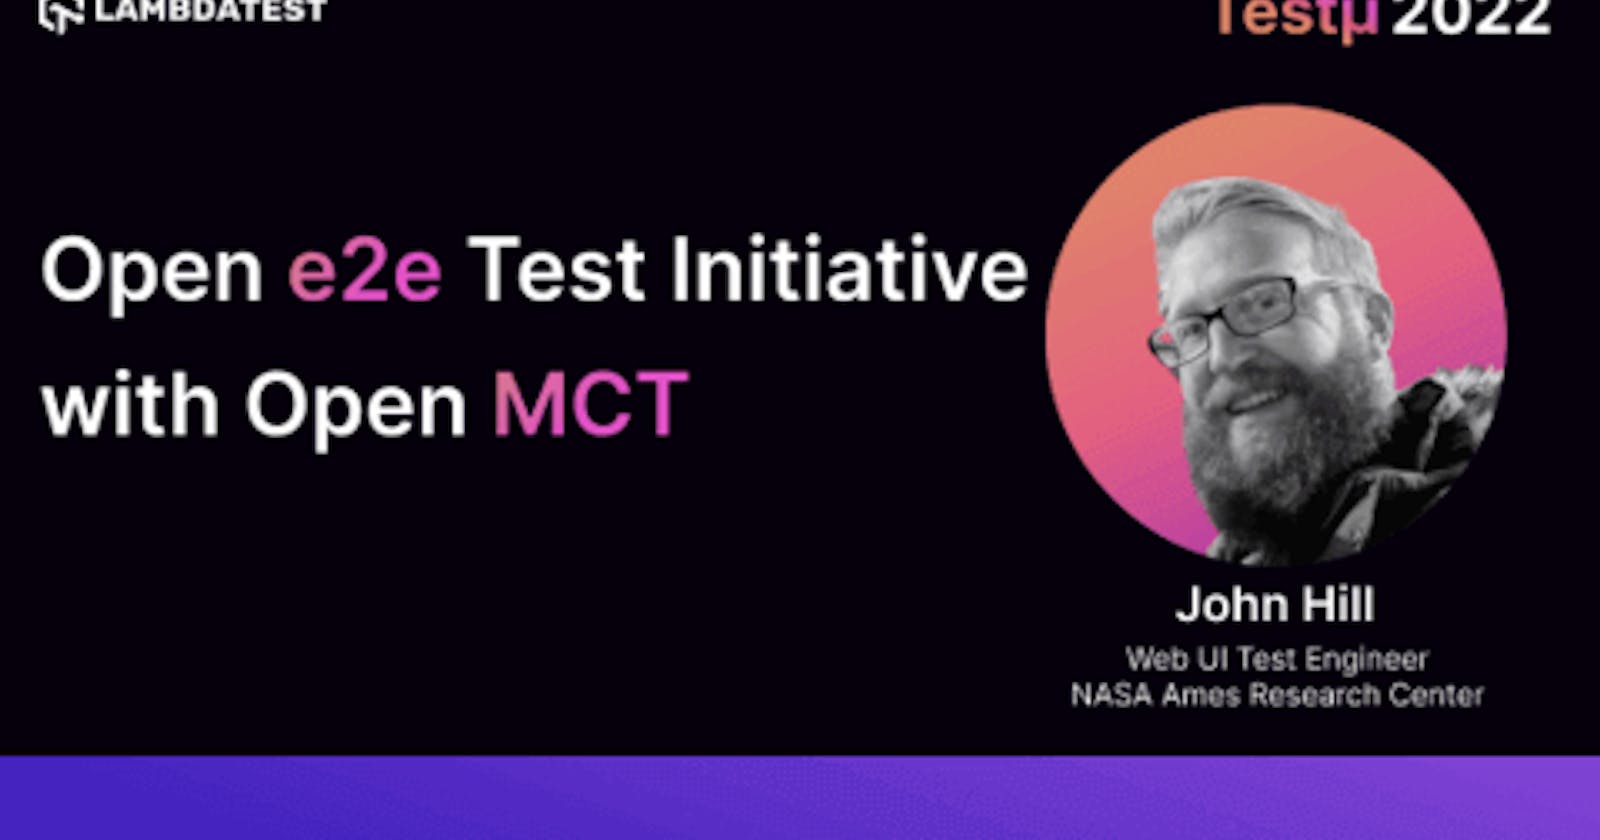 Open e2e Test Initiative with Open MCT: John Hill [Testμ 2022]